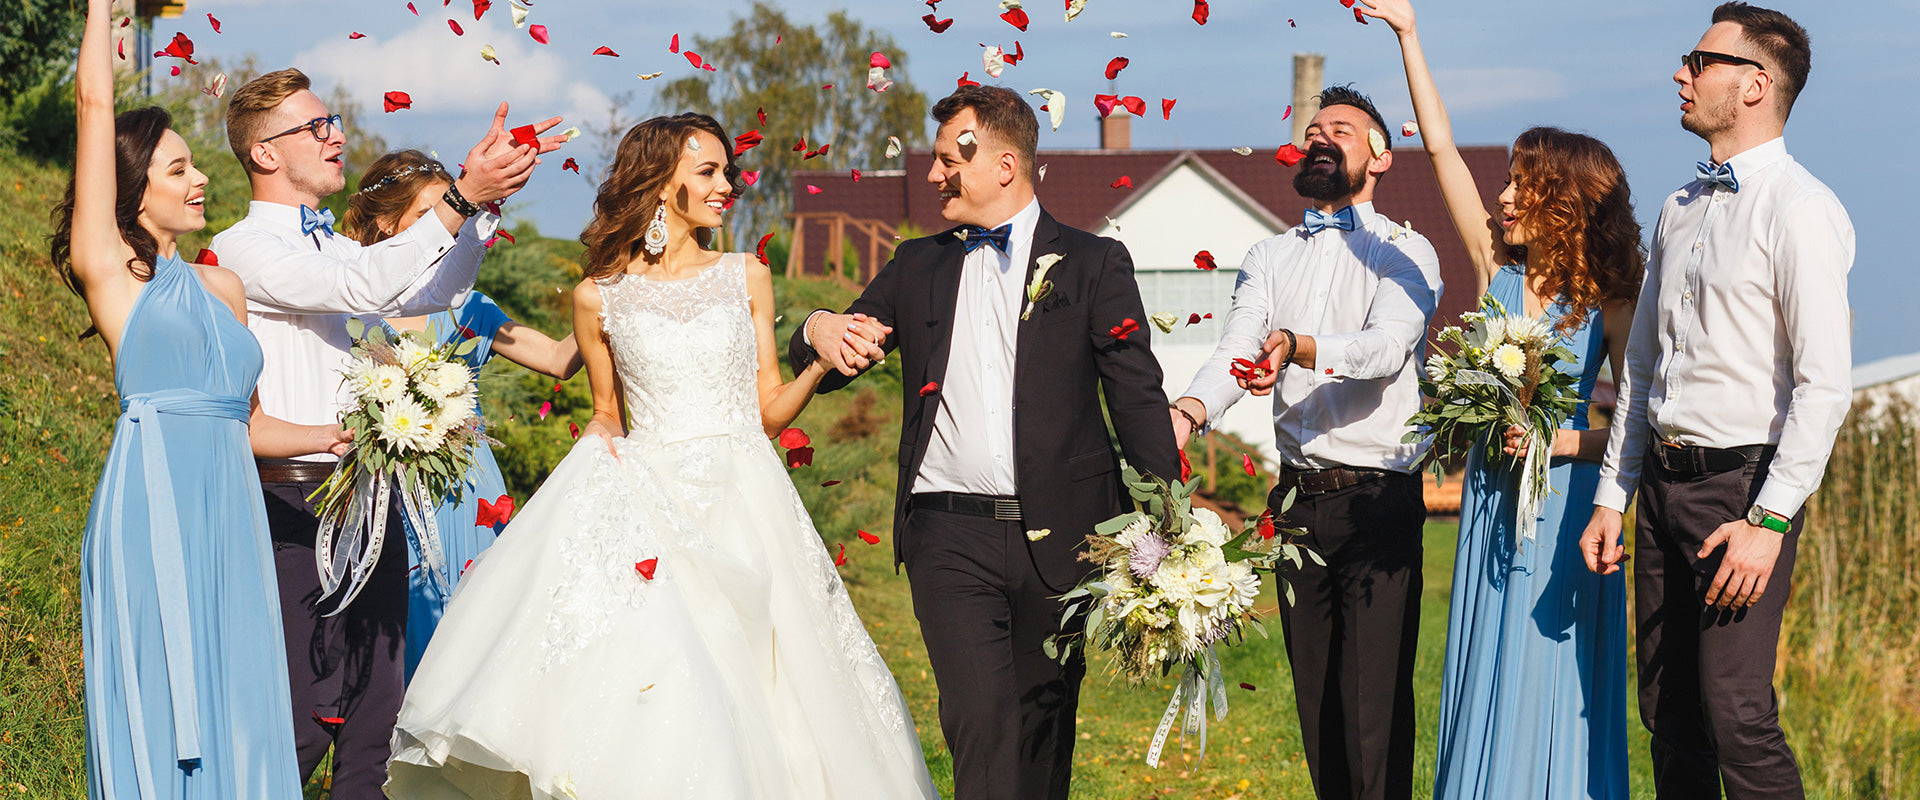 10 Backyard Wedding Ideas Couples Need to Pay Heed To